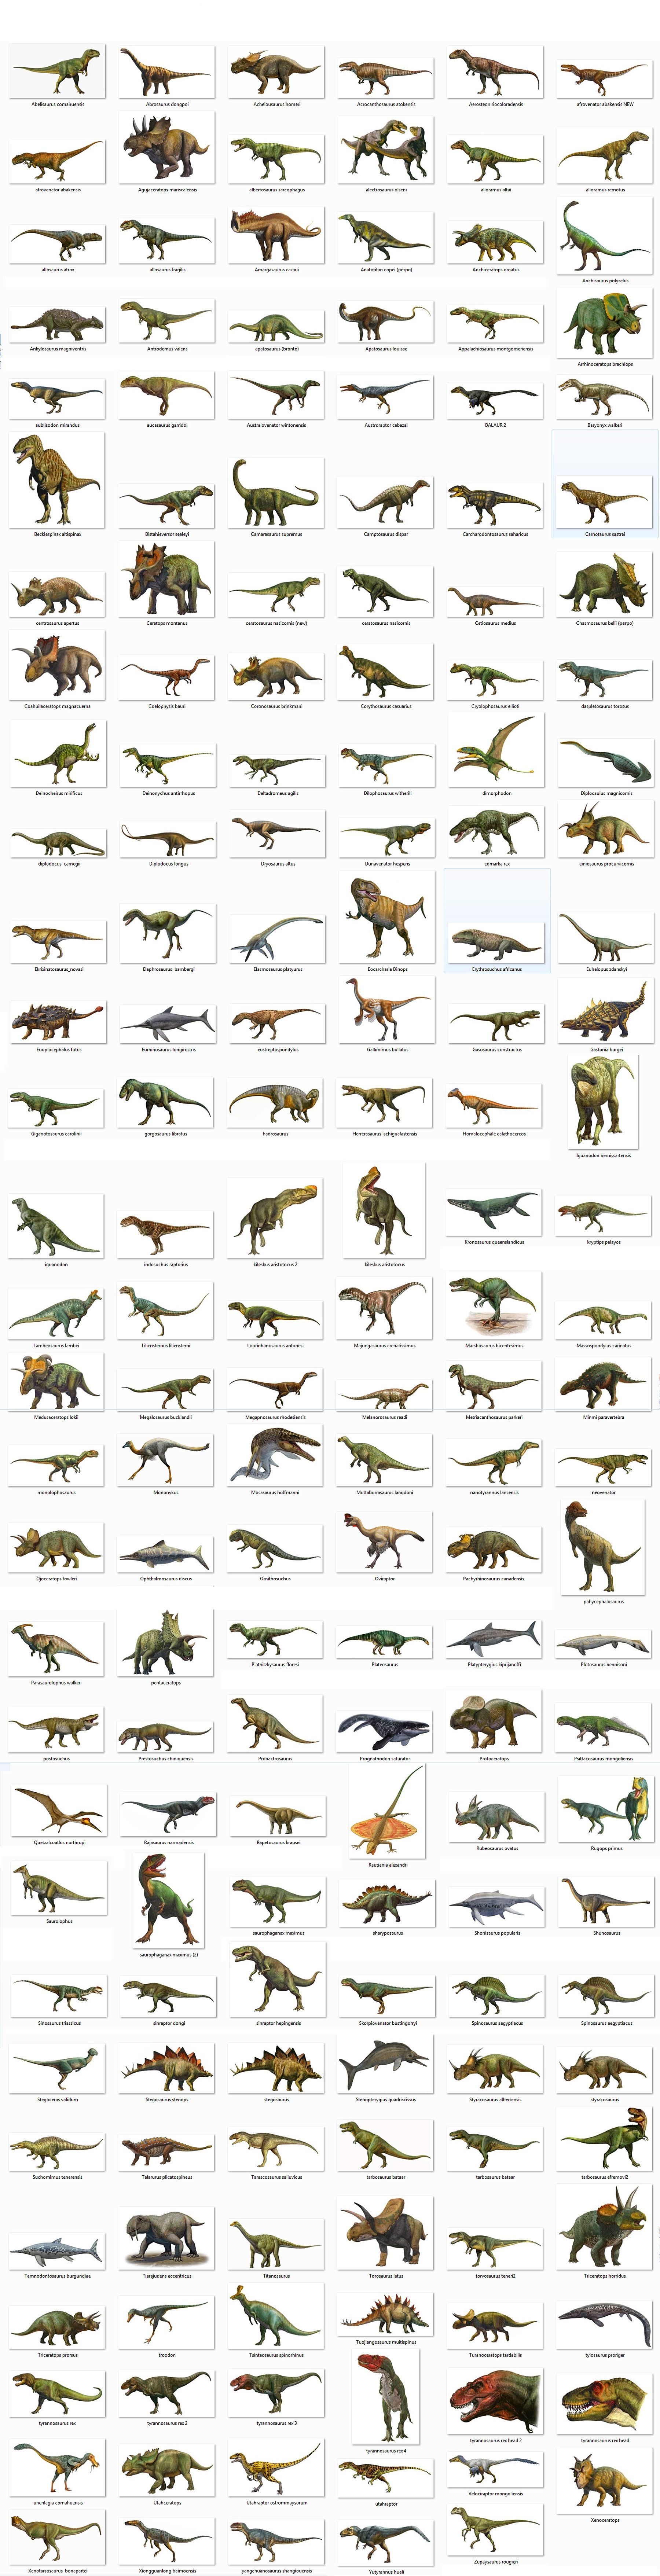 dinosaurs_list.jpg